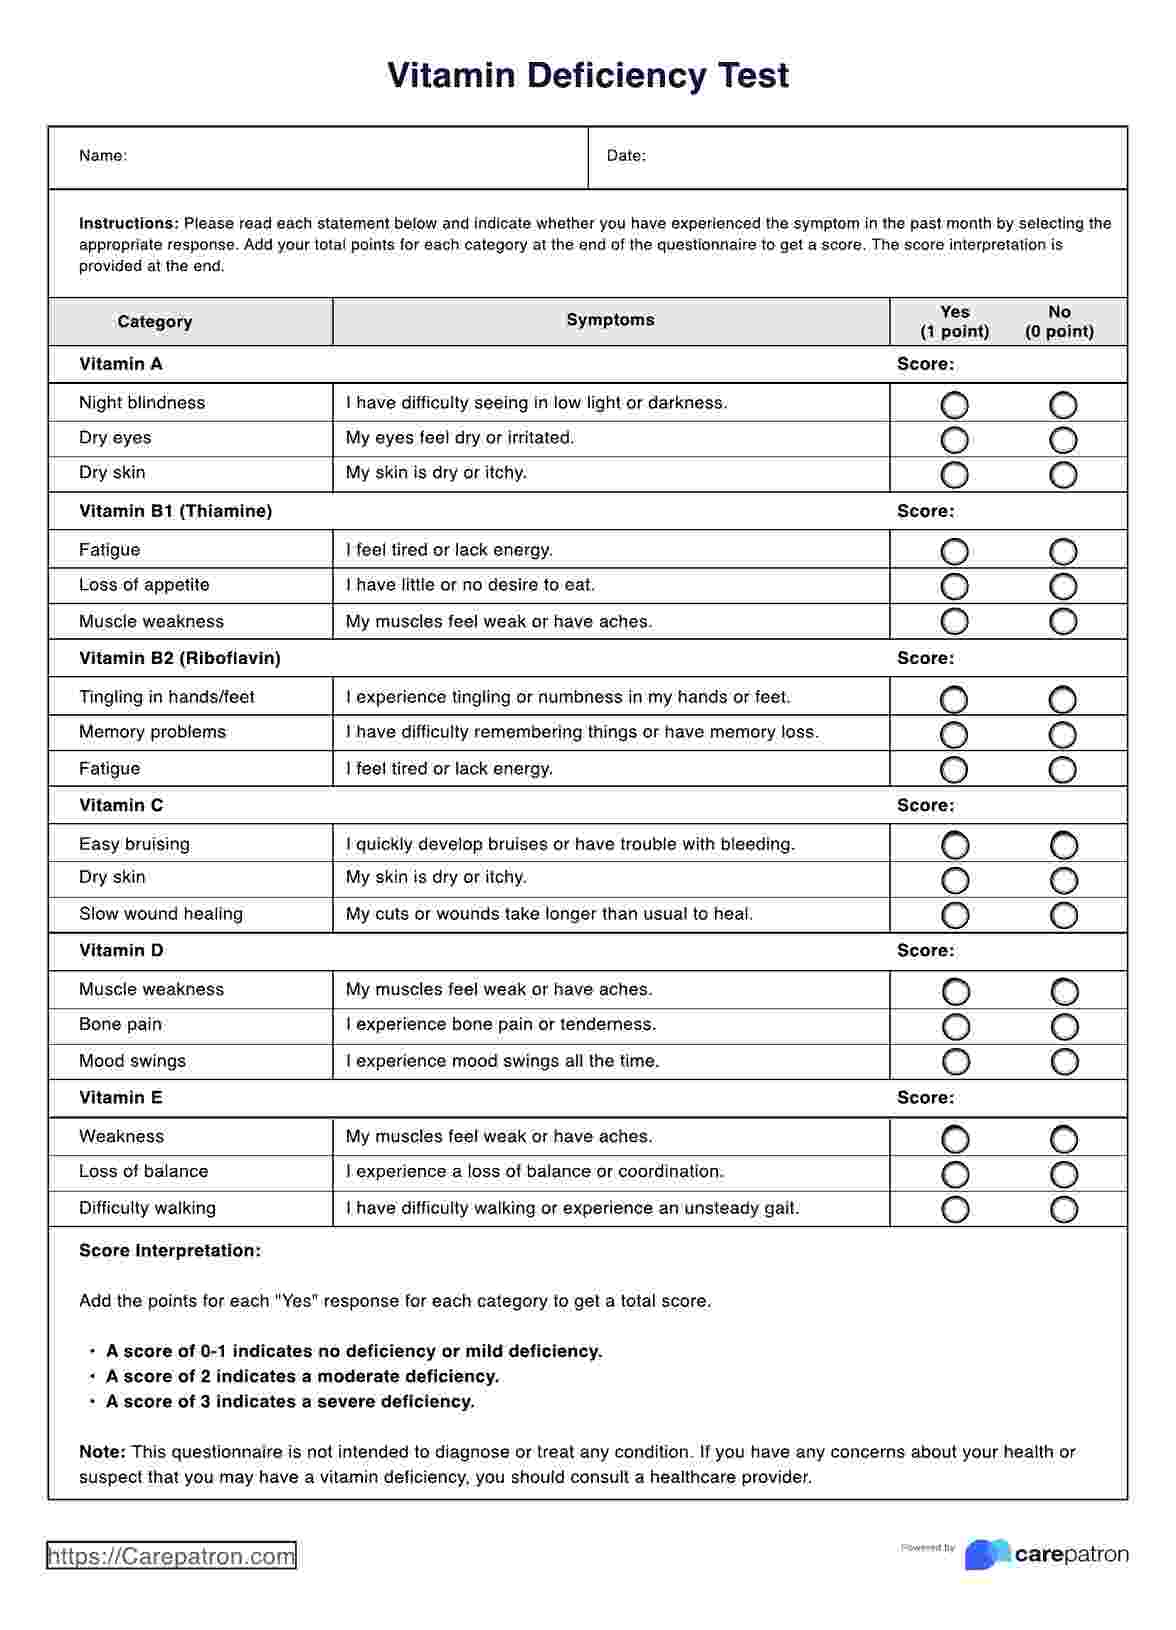 Vitamin Deficiency Test PDF Example